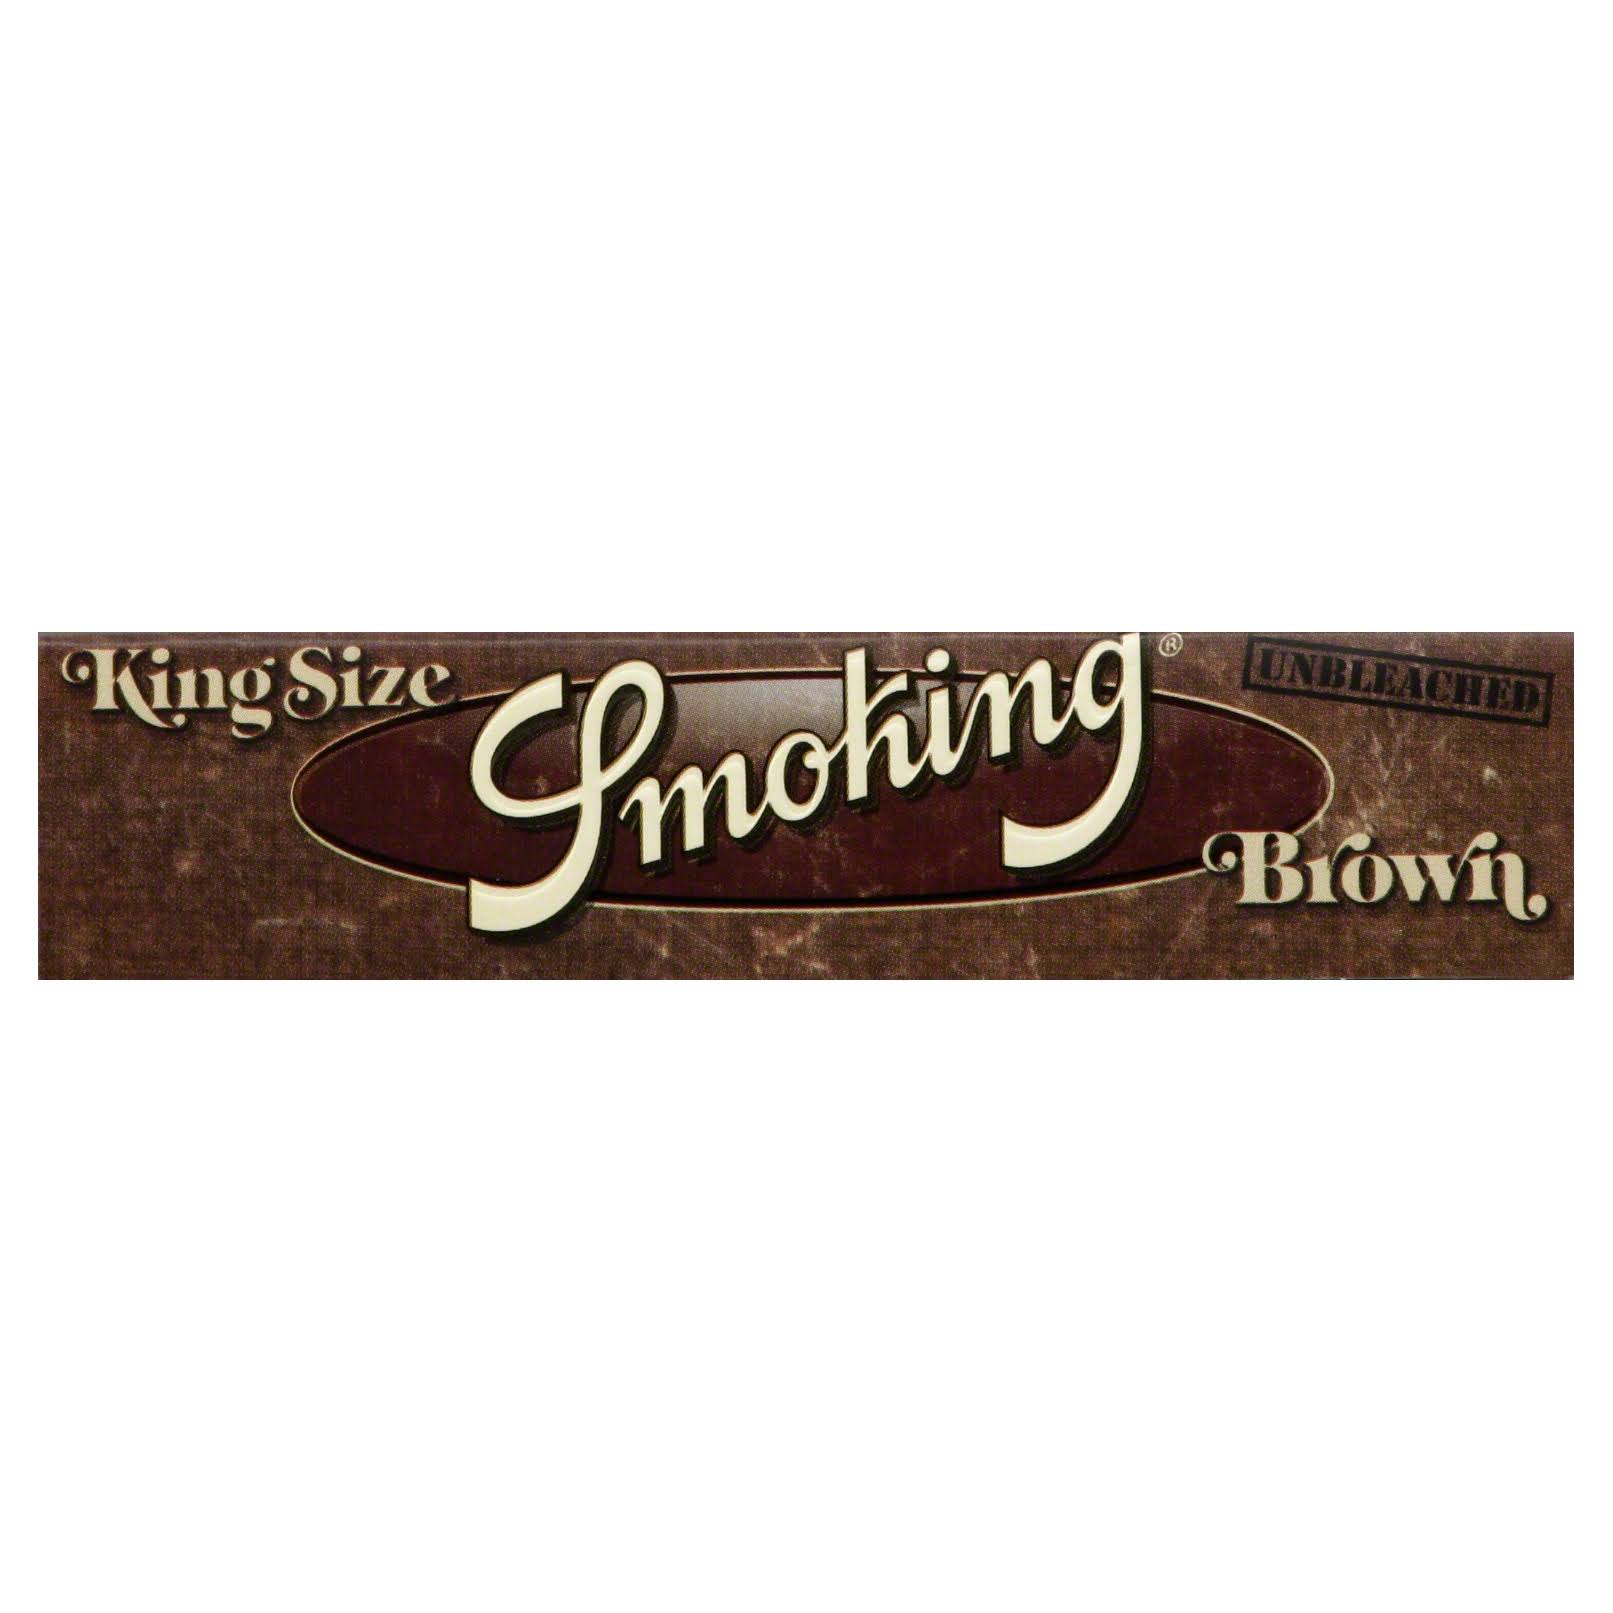 Smoking Rolling Paper, Brown, King Size - 33 leaves